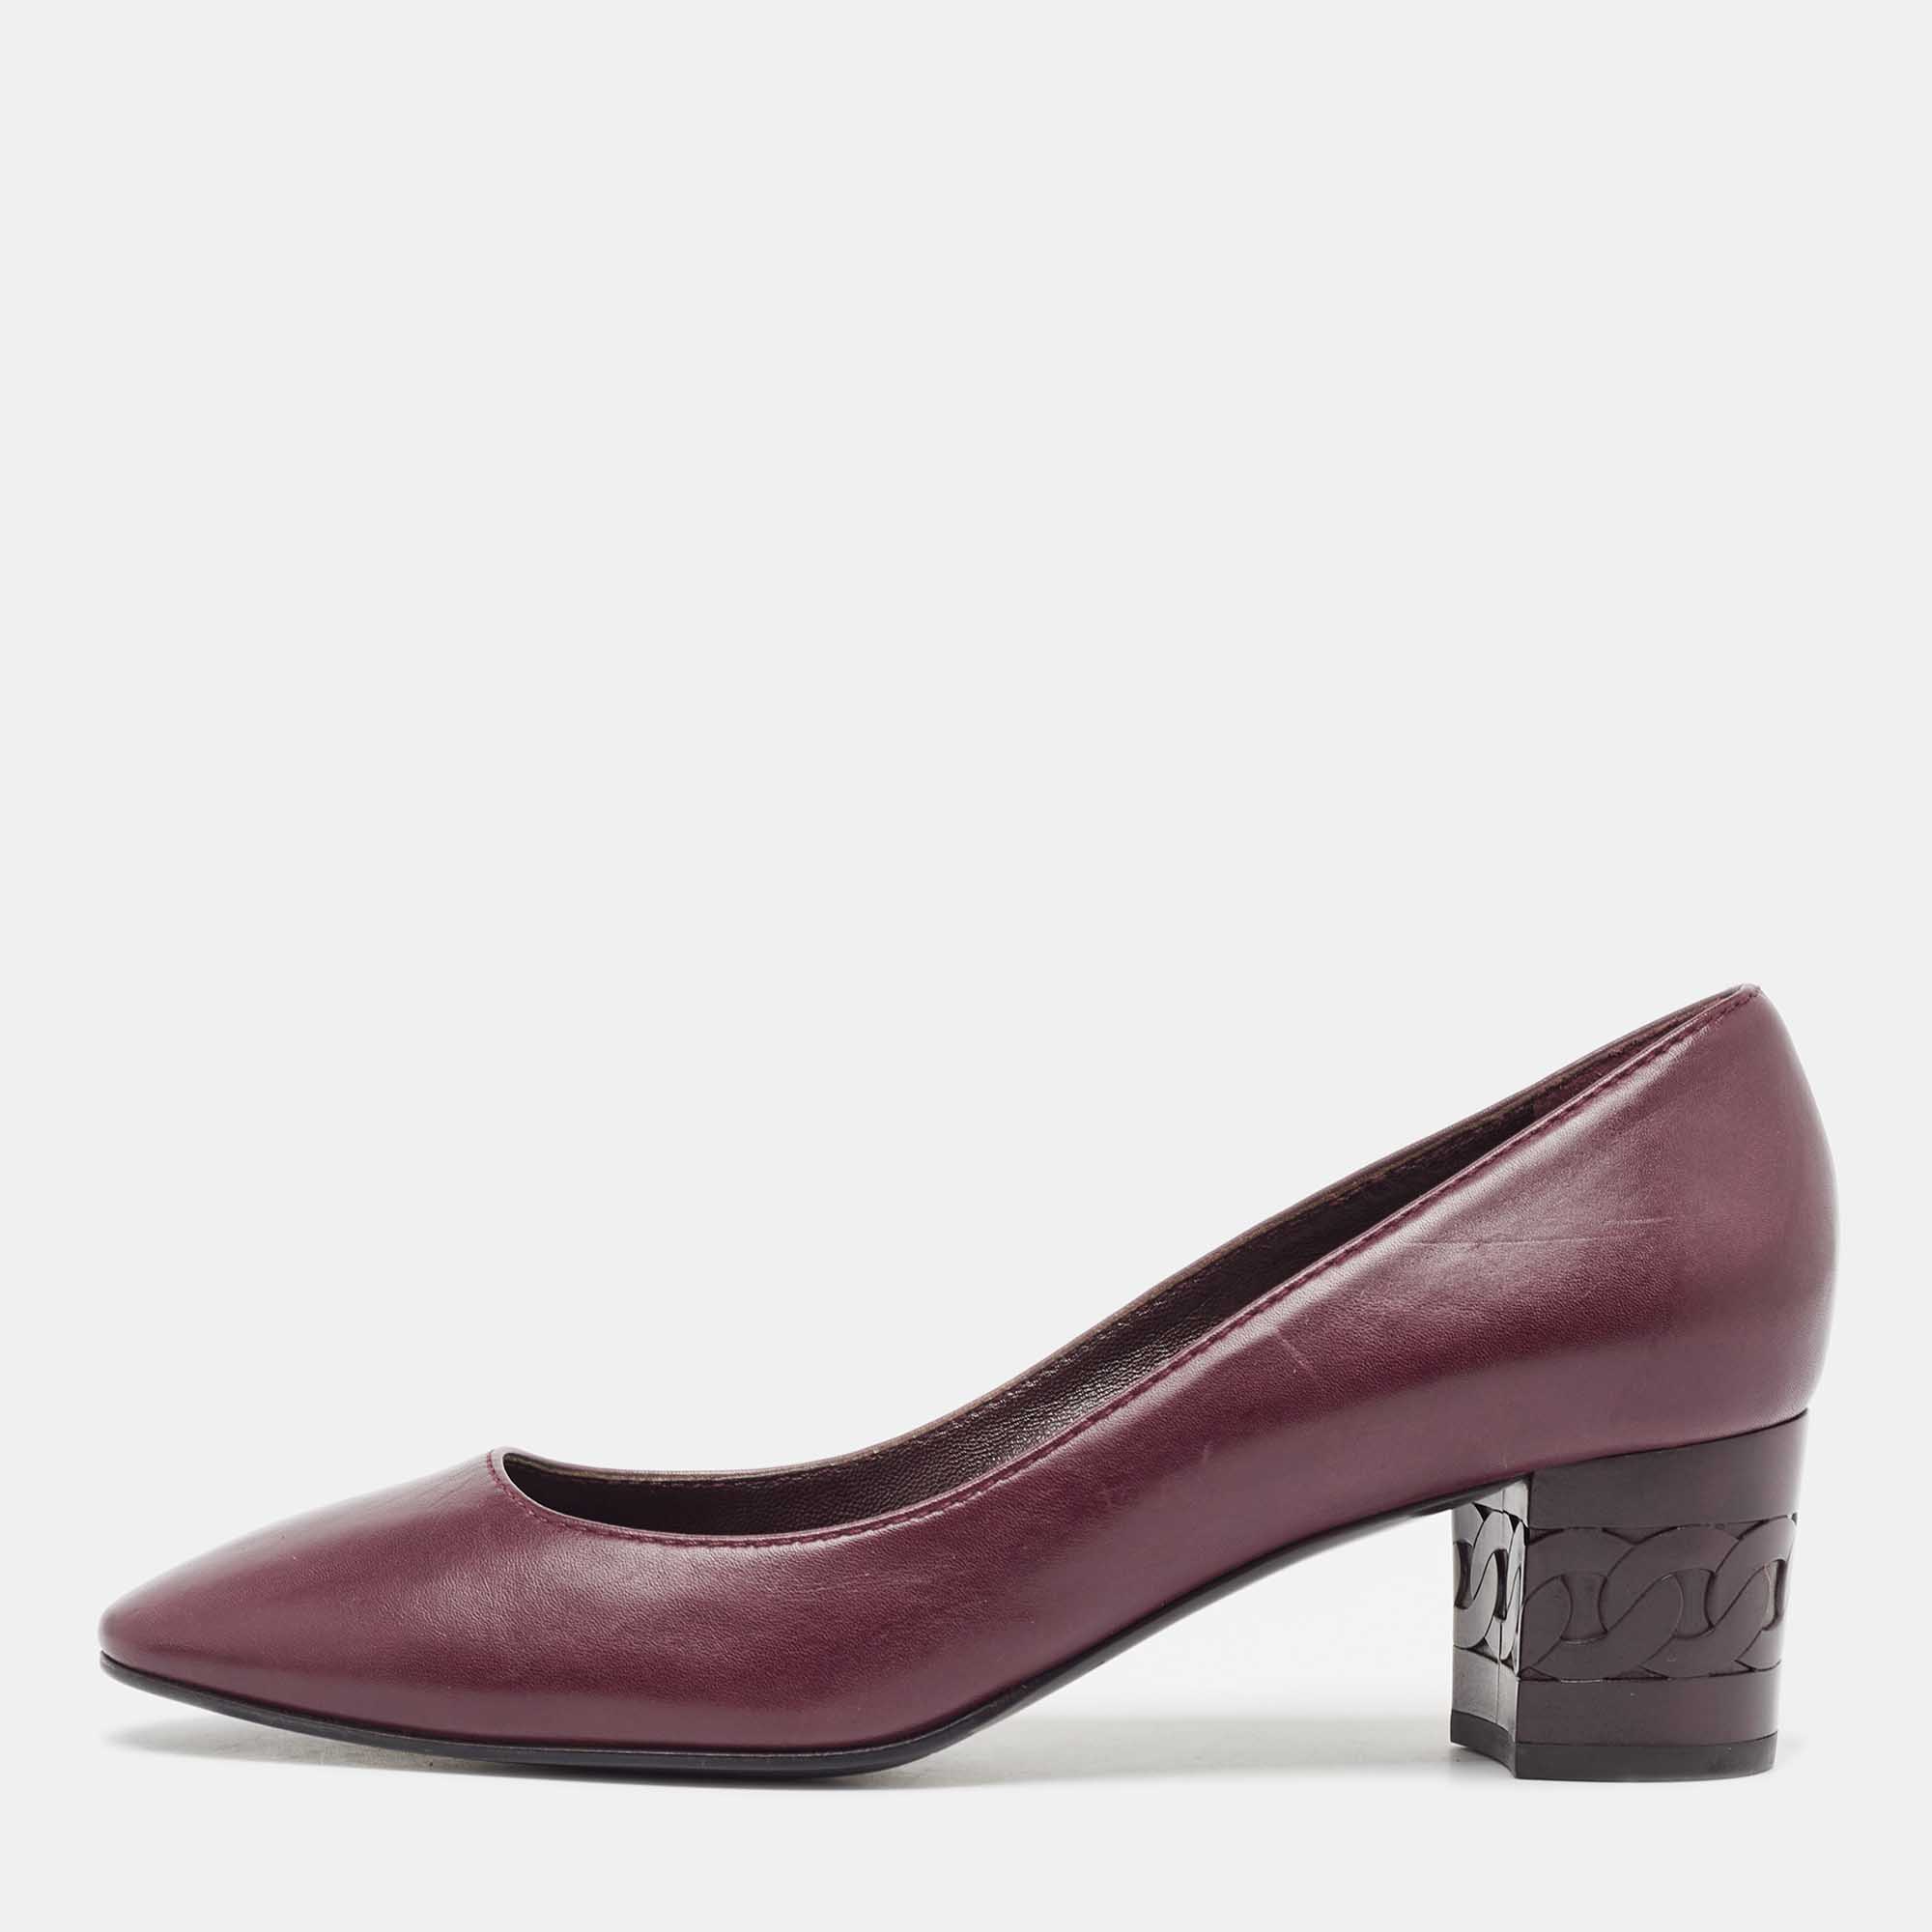 Casadei burgundy leather block heel  pumps size 37